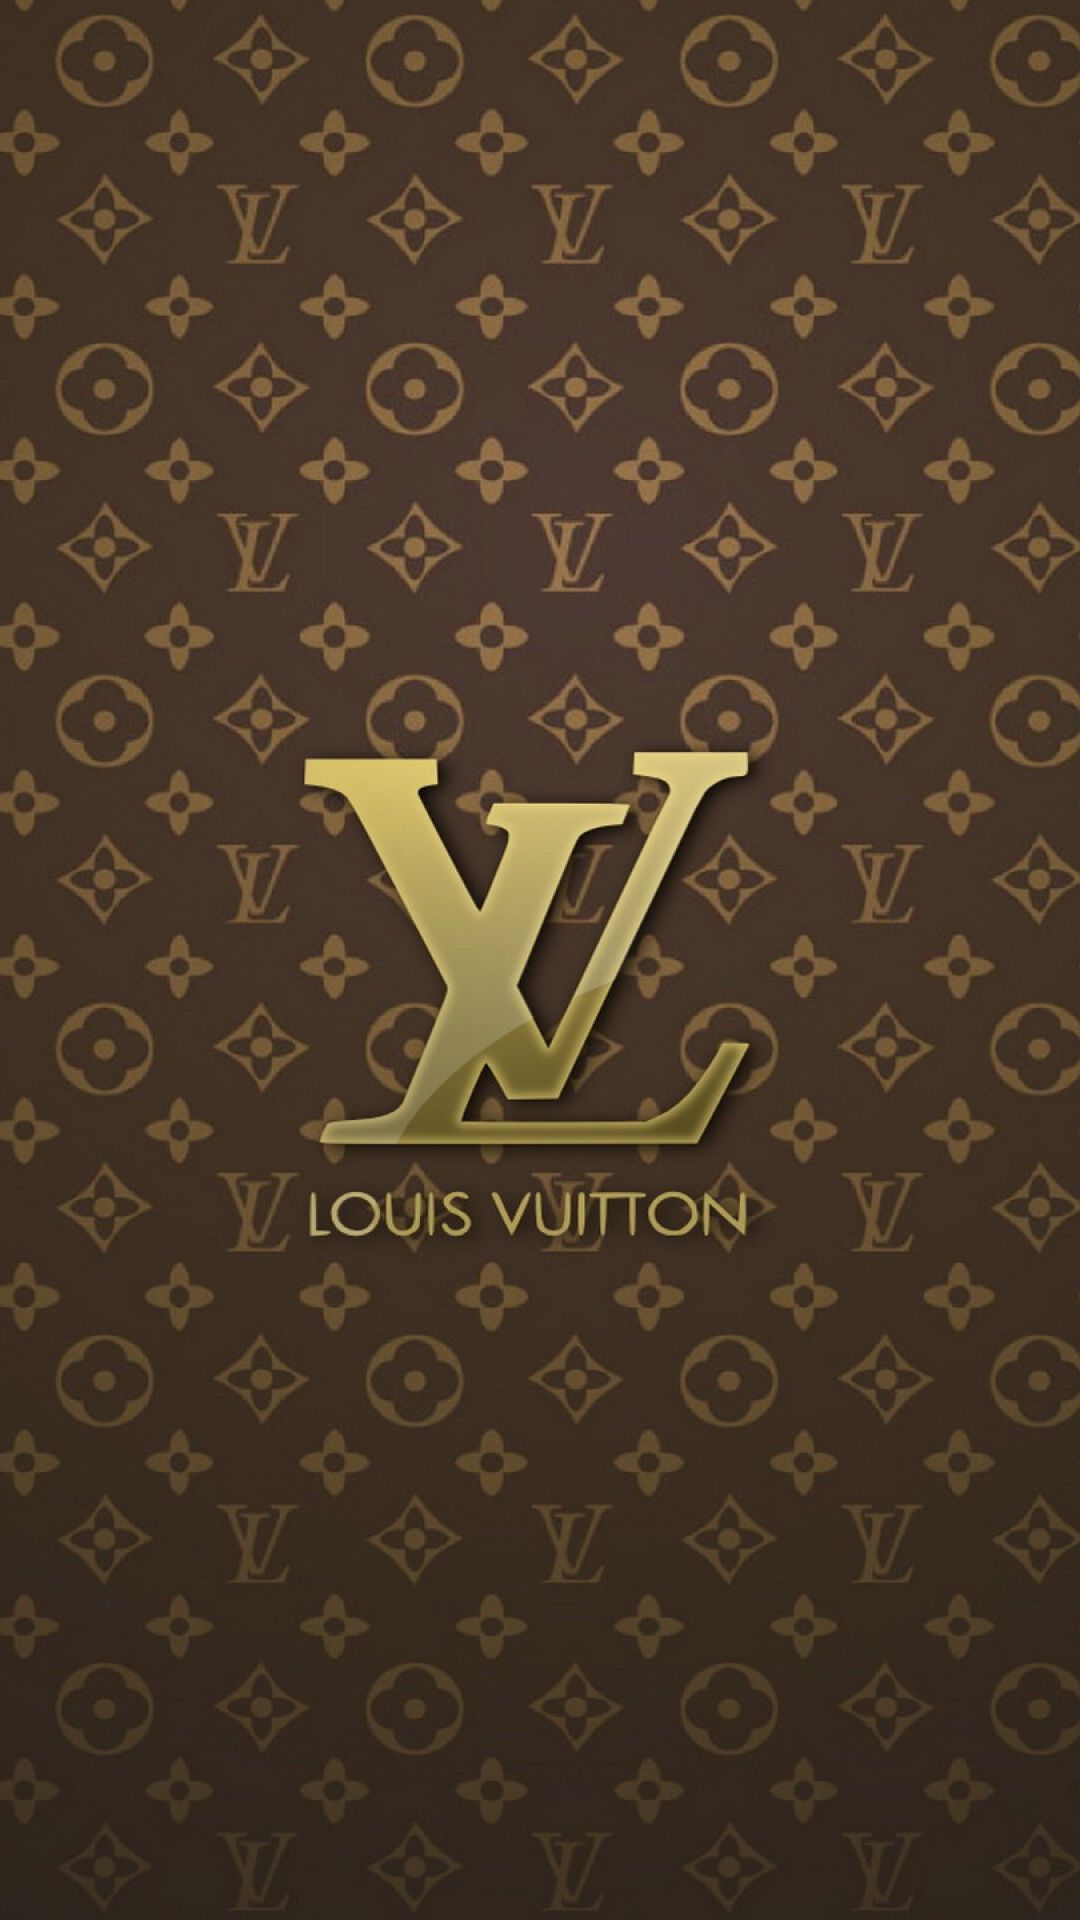 Louis Vuitton wallpaper. Louis vuitton iphone wallpaper, Louis vuitton, Vuitton